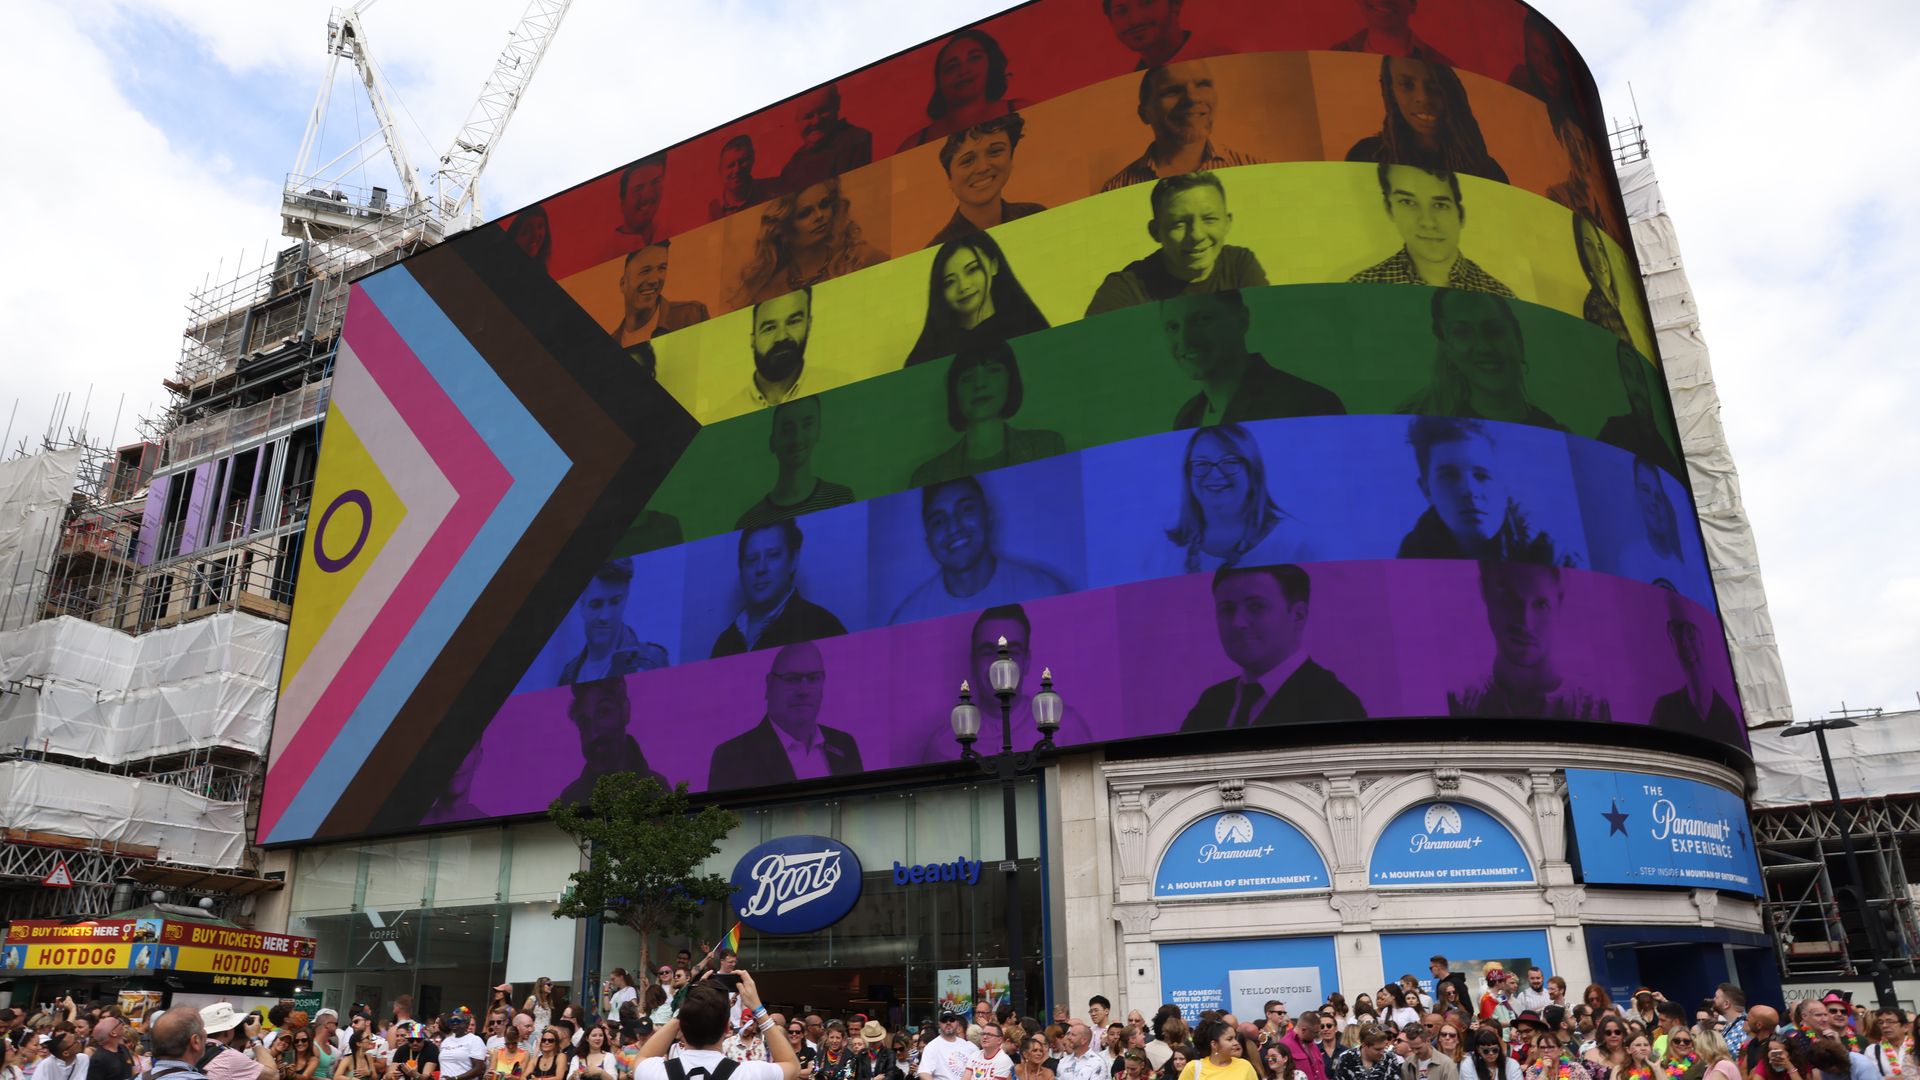 A billboard featuring the Pride Progress flag